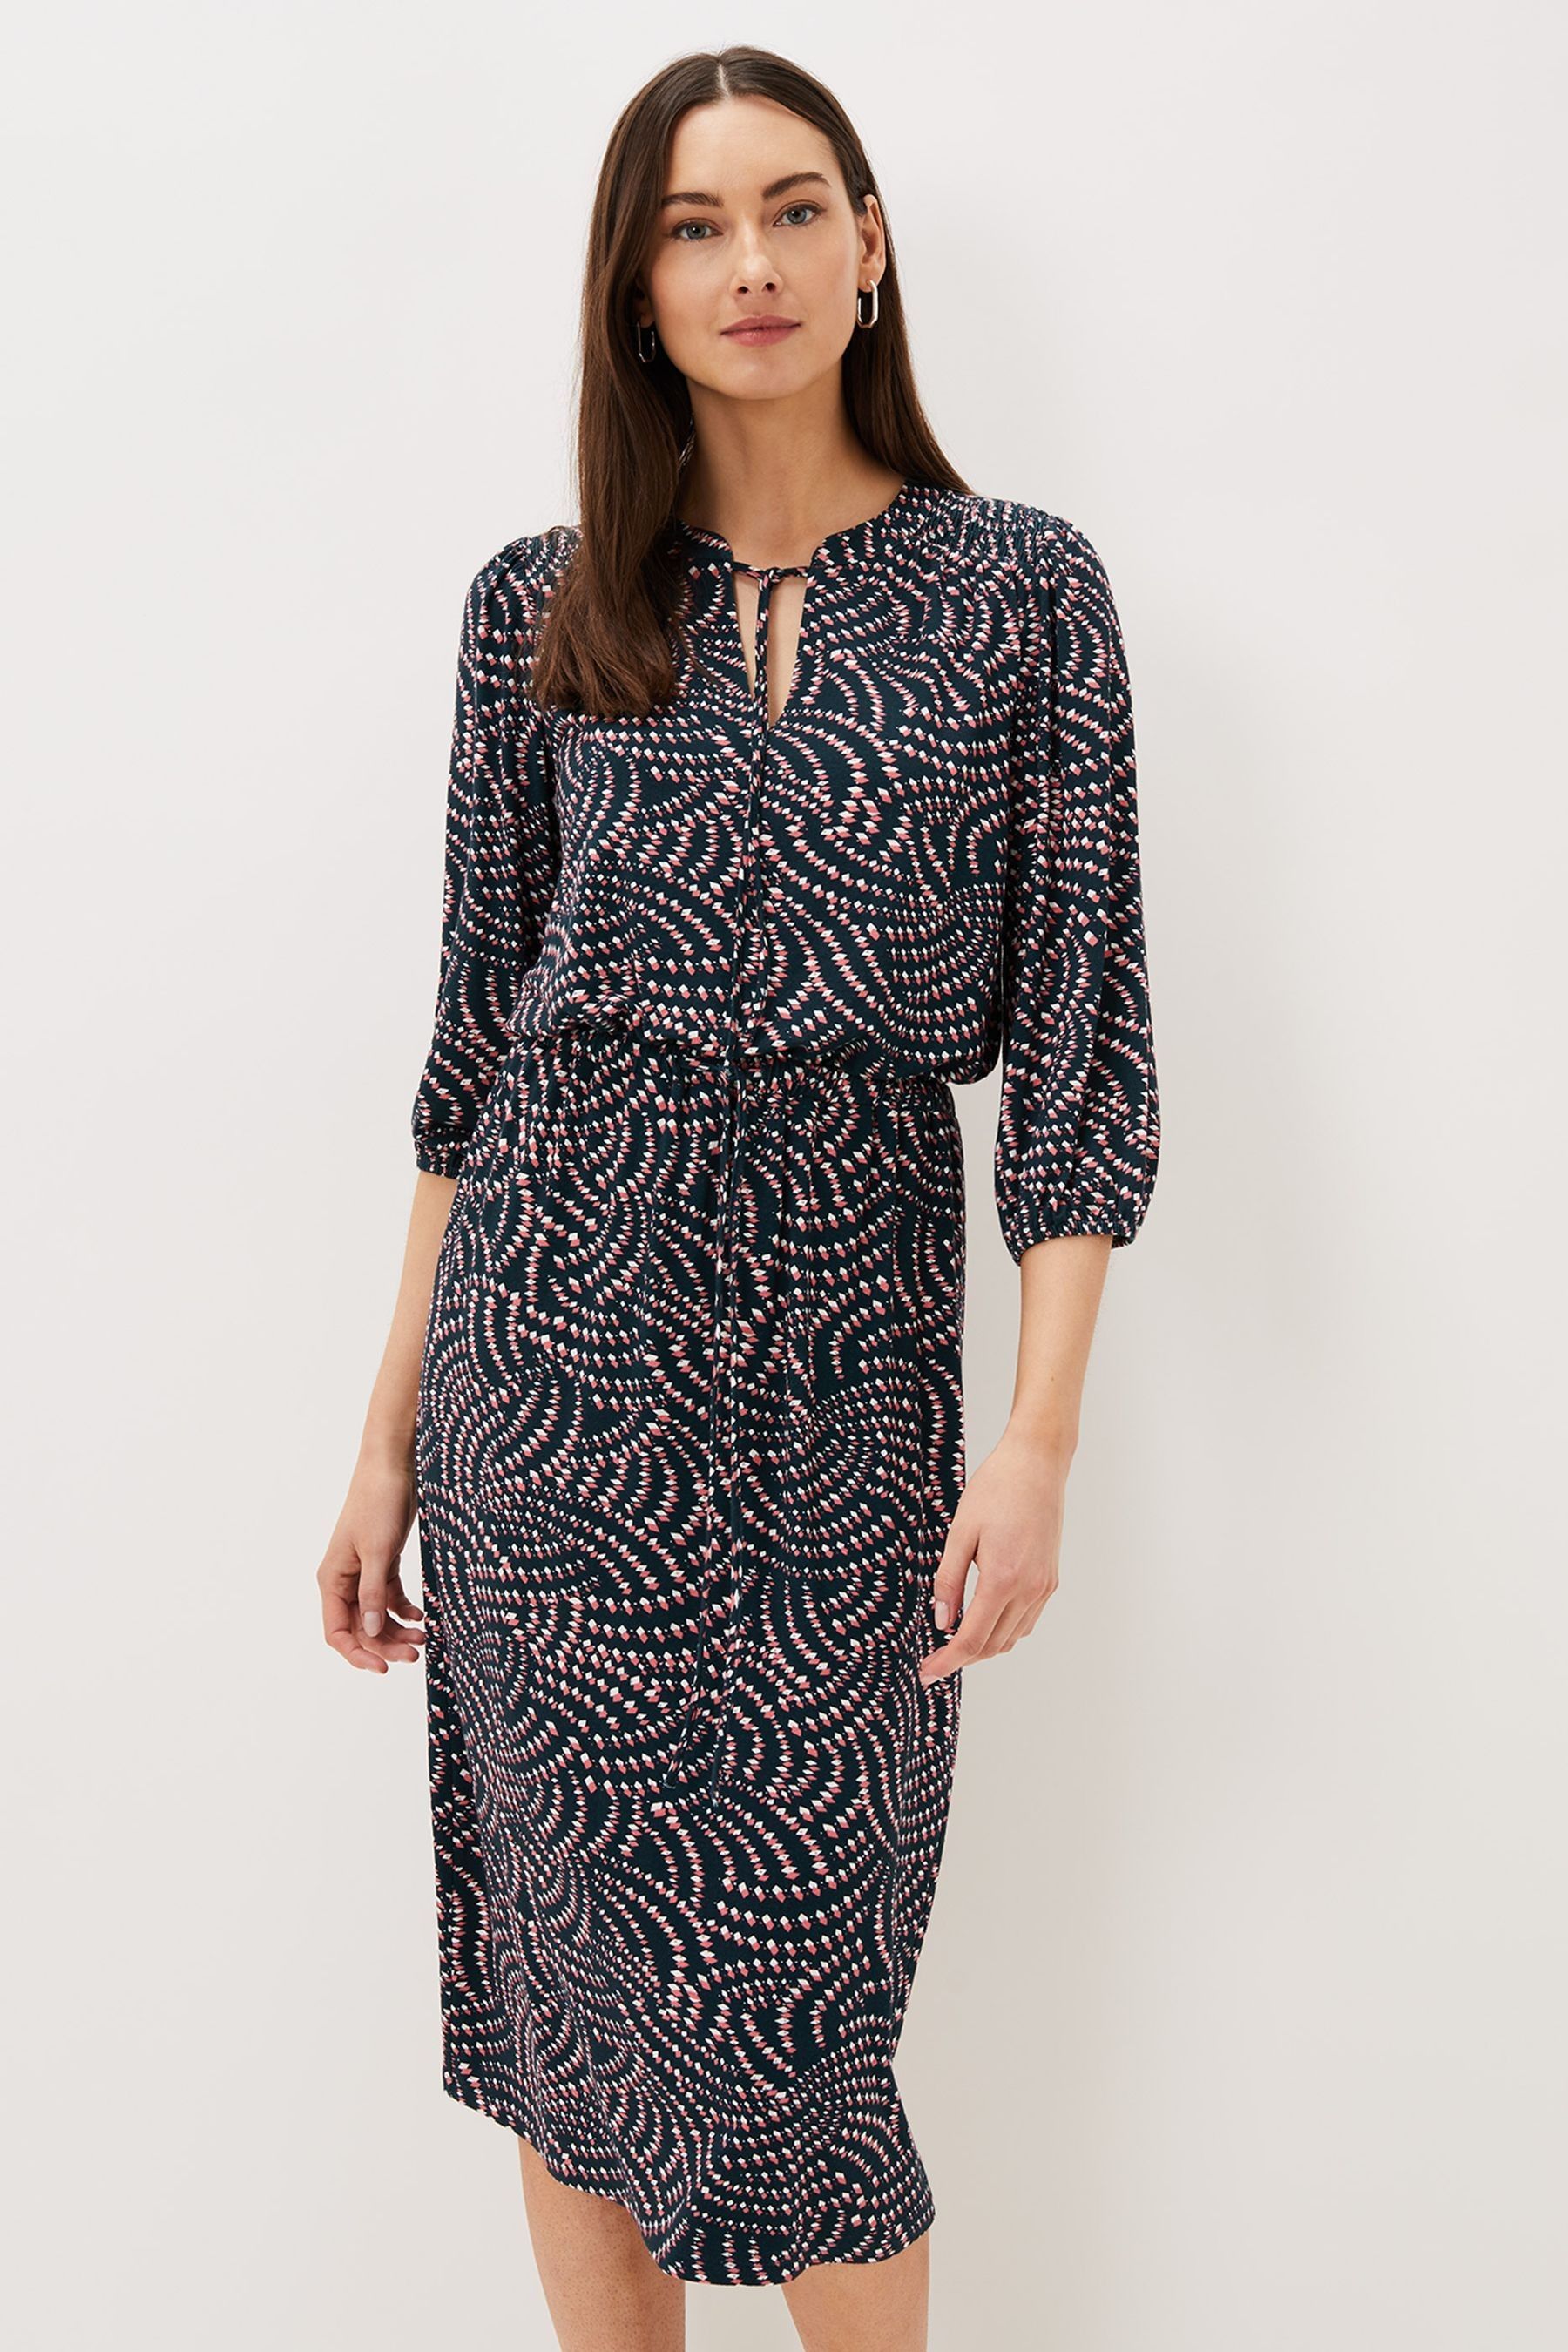 Buy Phase Eight Grace Black Geo Tile Print Dress from Next Ireland